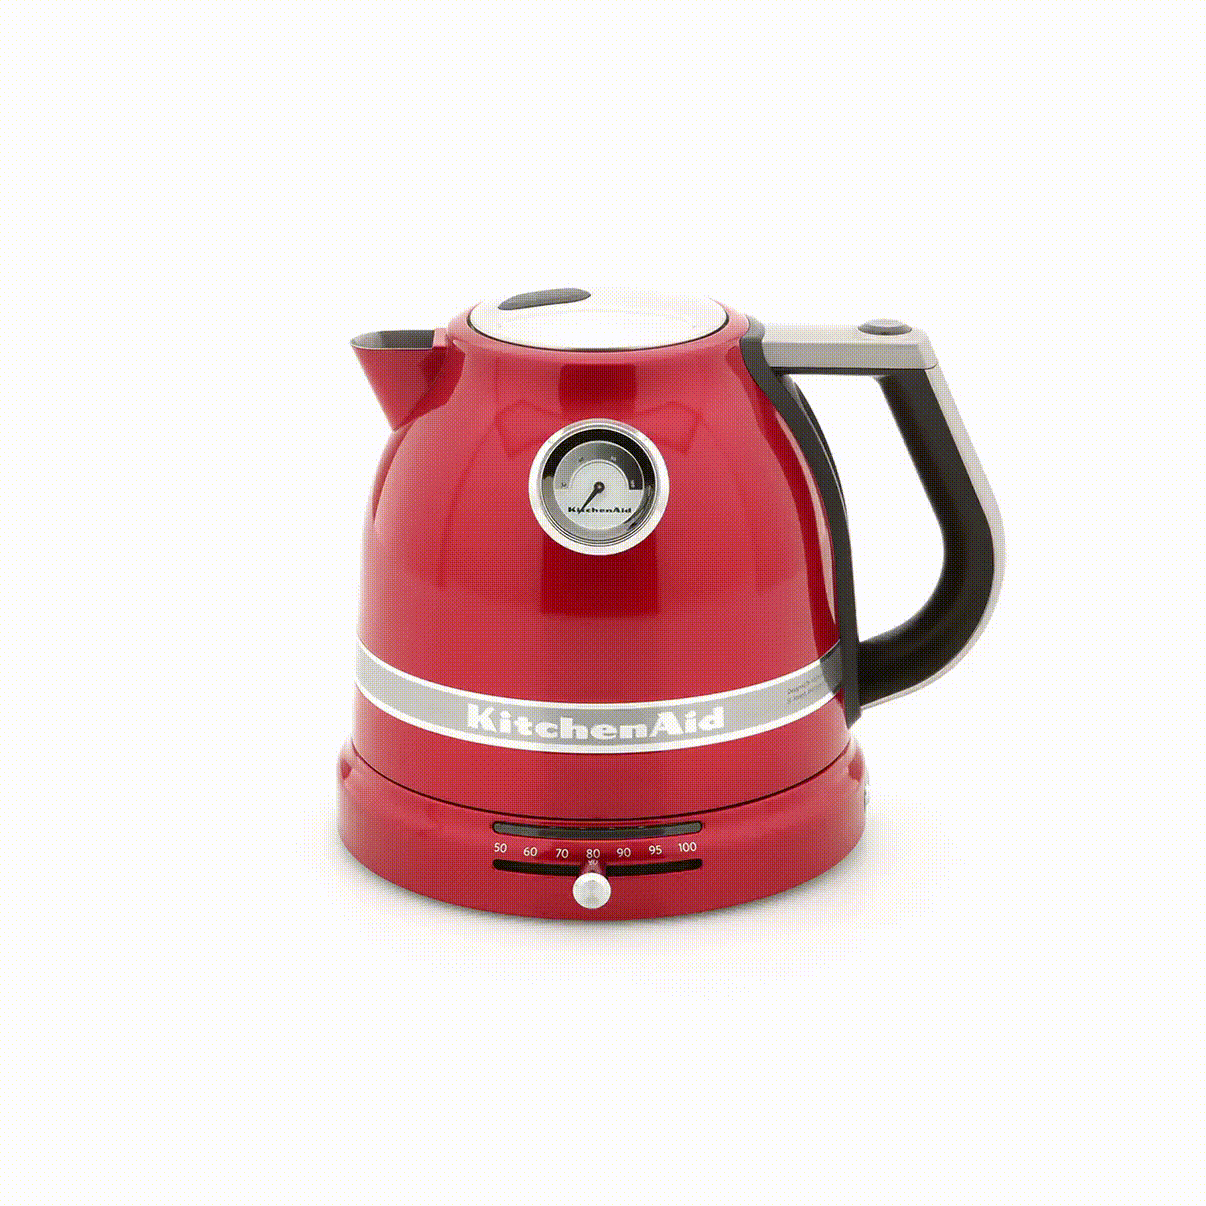 https://3fa-media.com/kitchenaid/kitchenaid-artisan-electric-kettle-1-5-l__6630_e419c59.gif